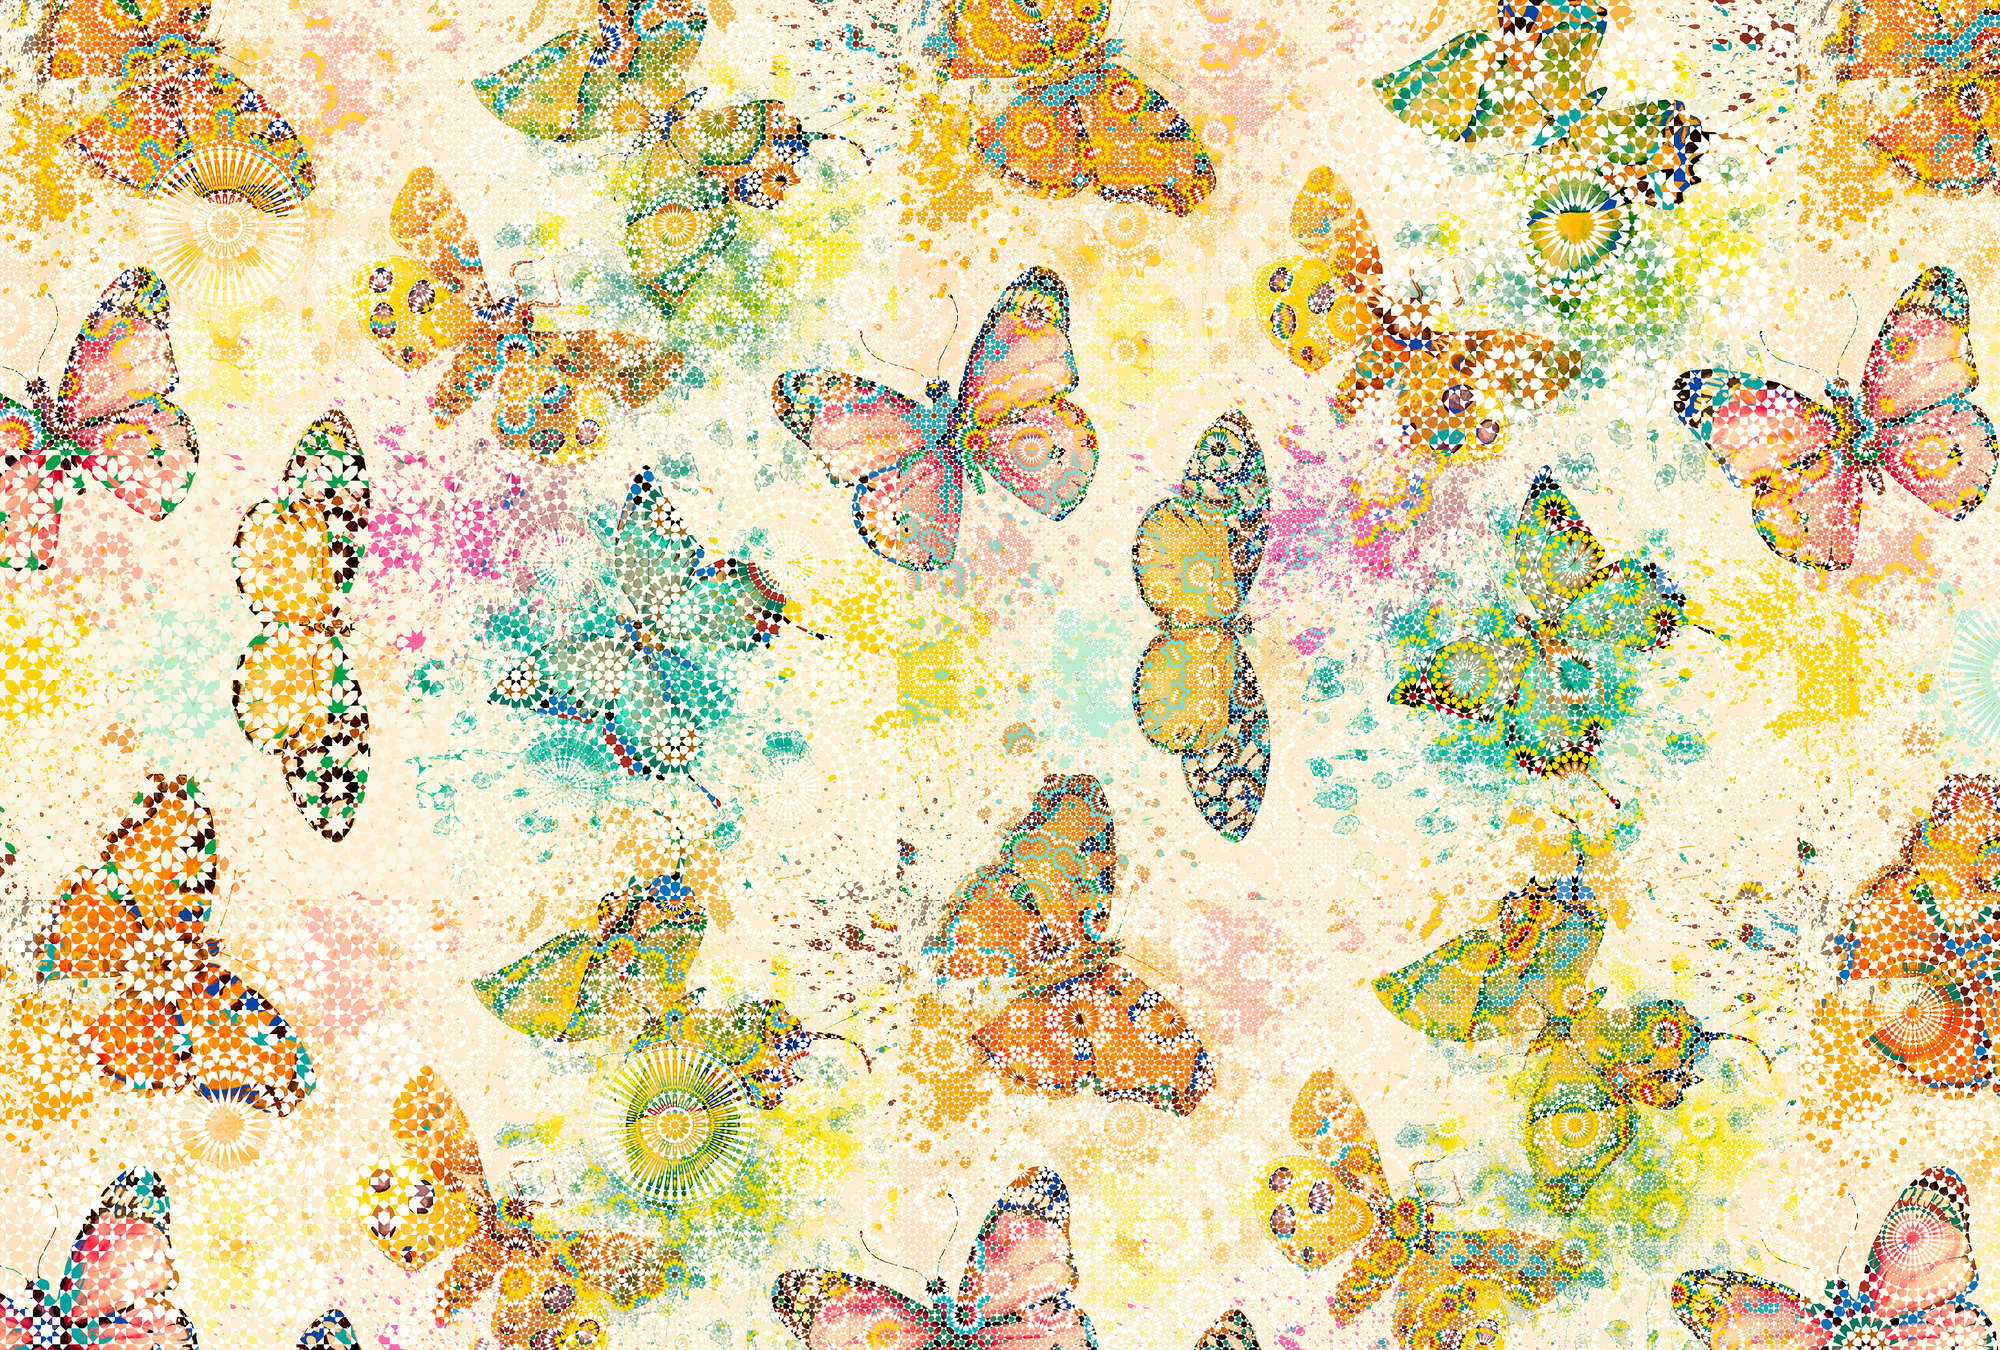             Fototapete Schmetterling im Mosaik Stil – Creme, Orange
        